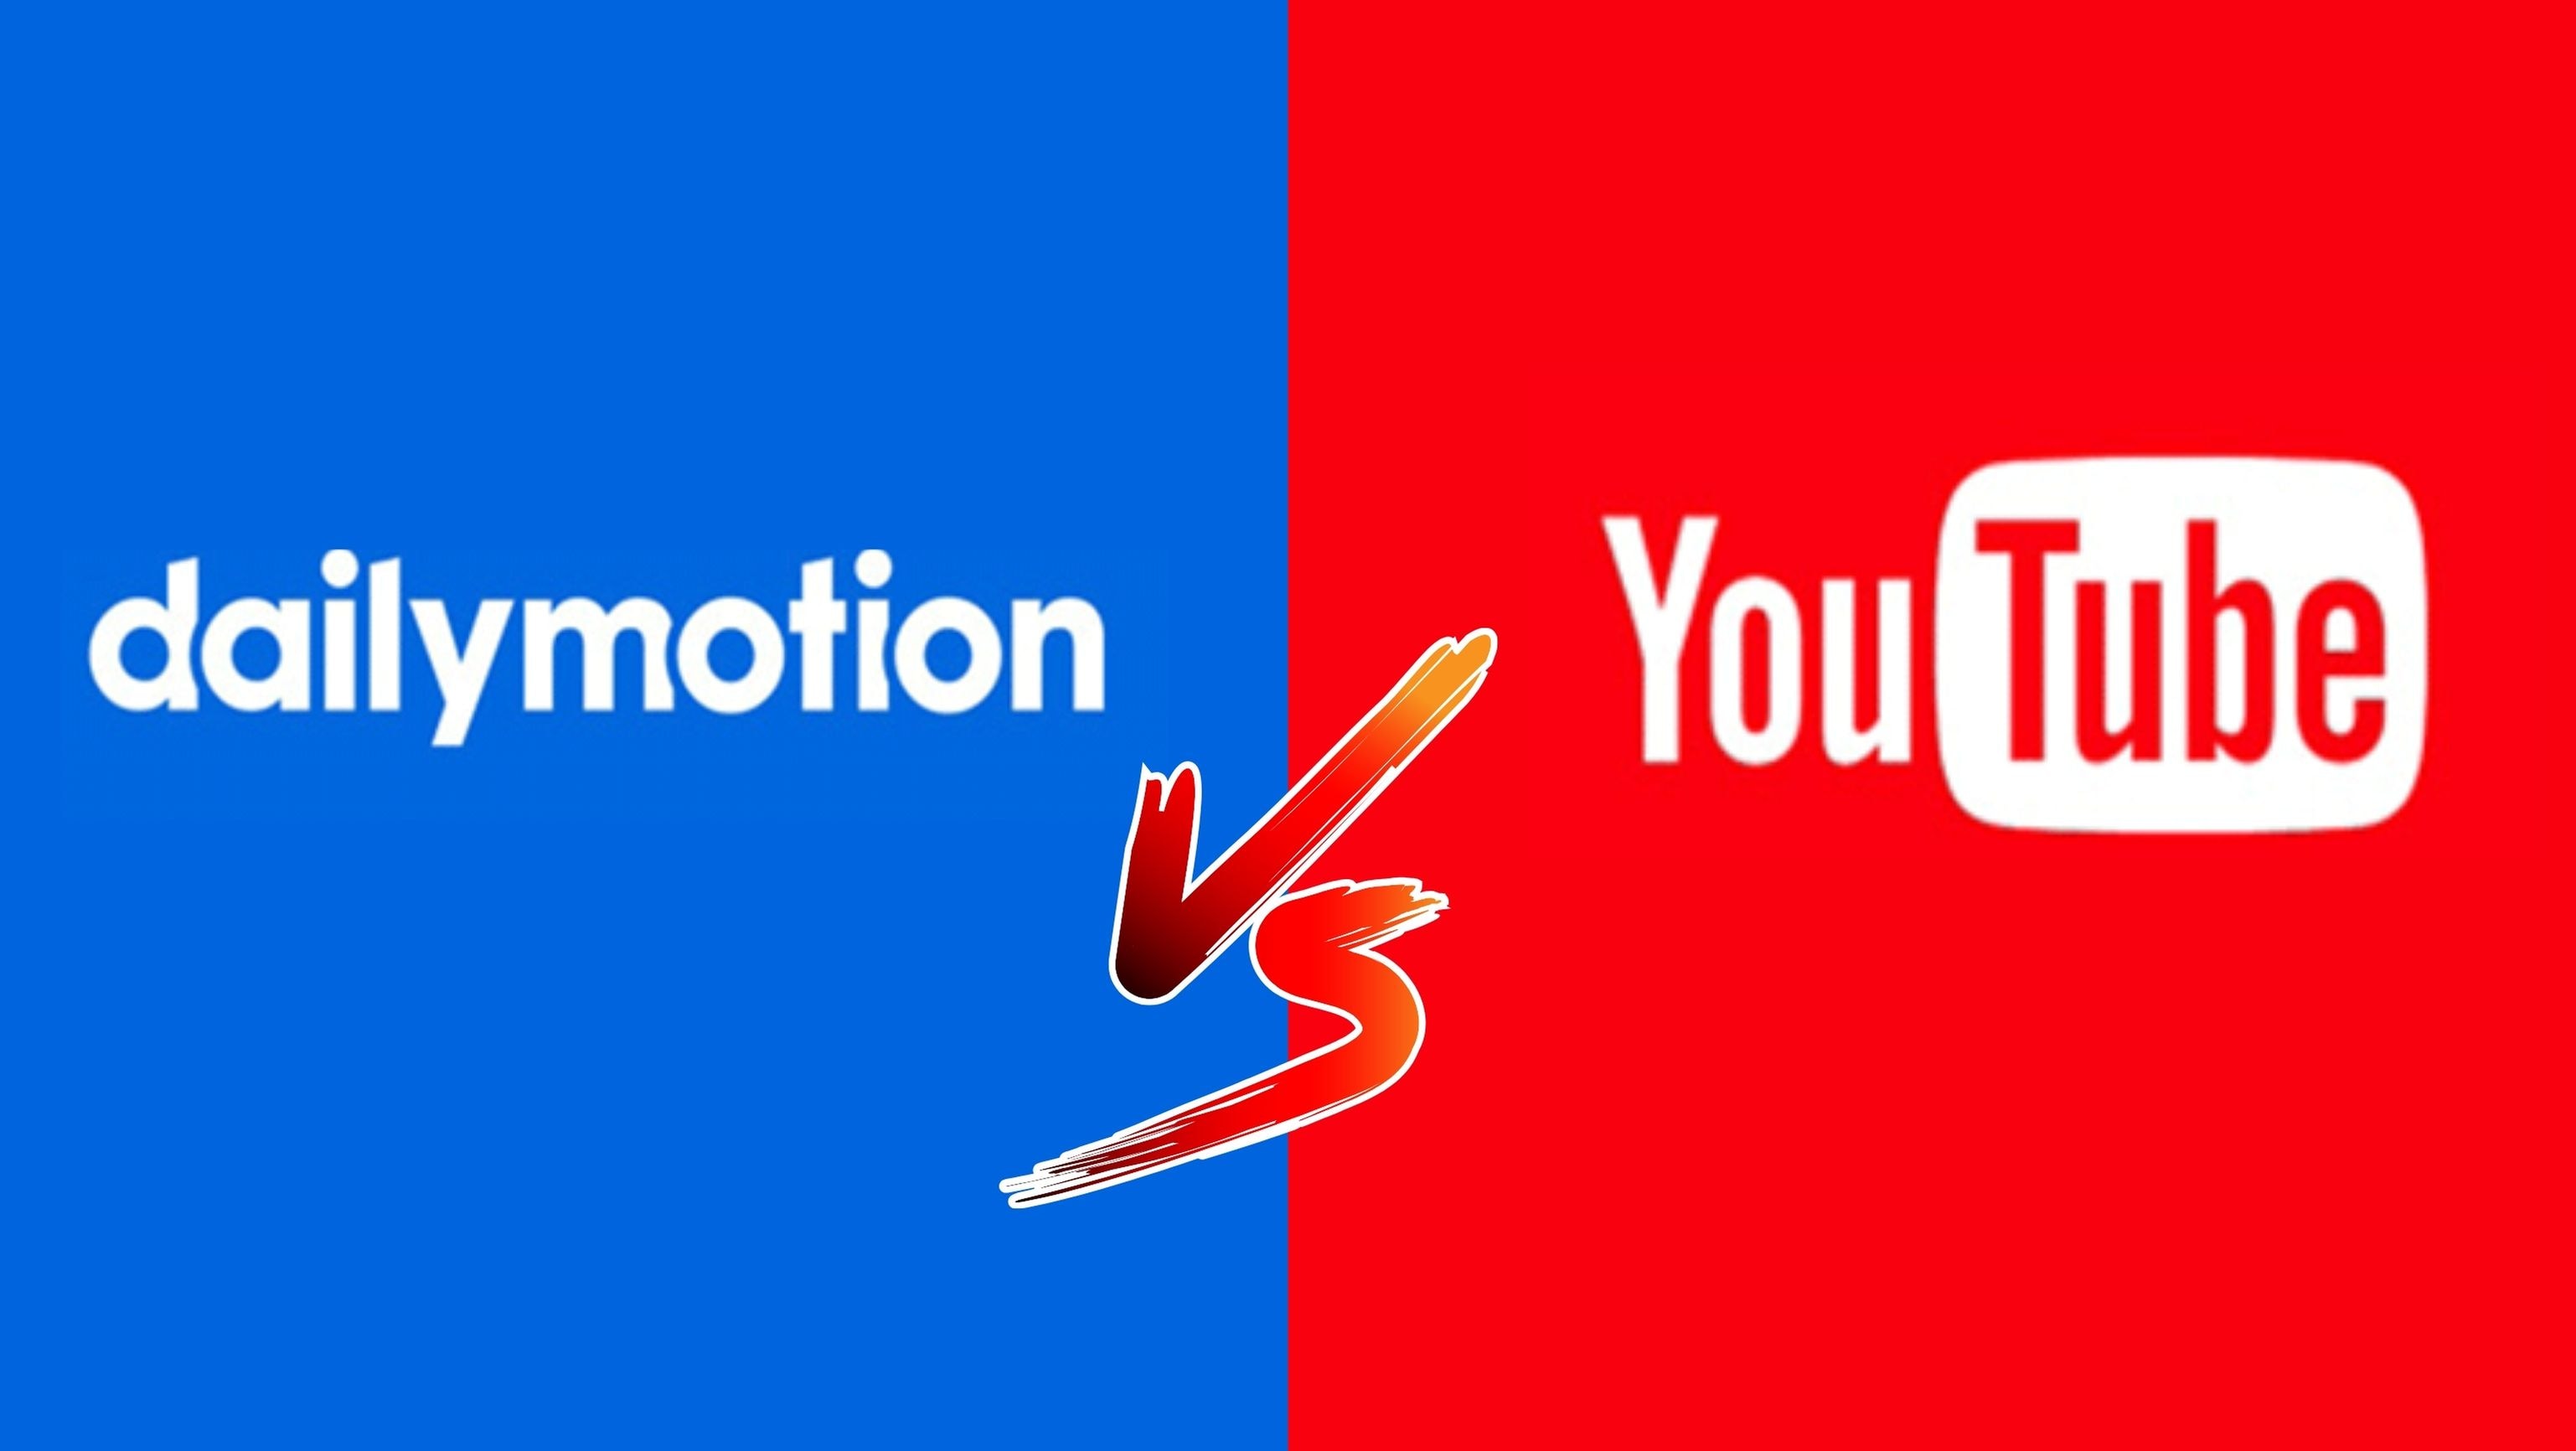 dailymotion monetization vs youtube